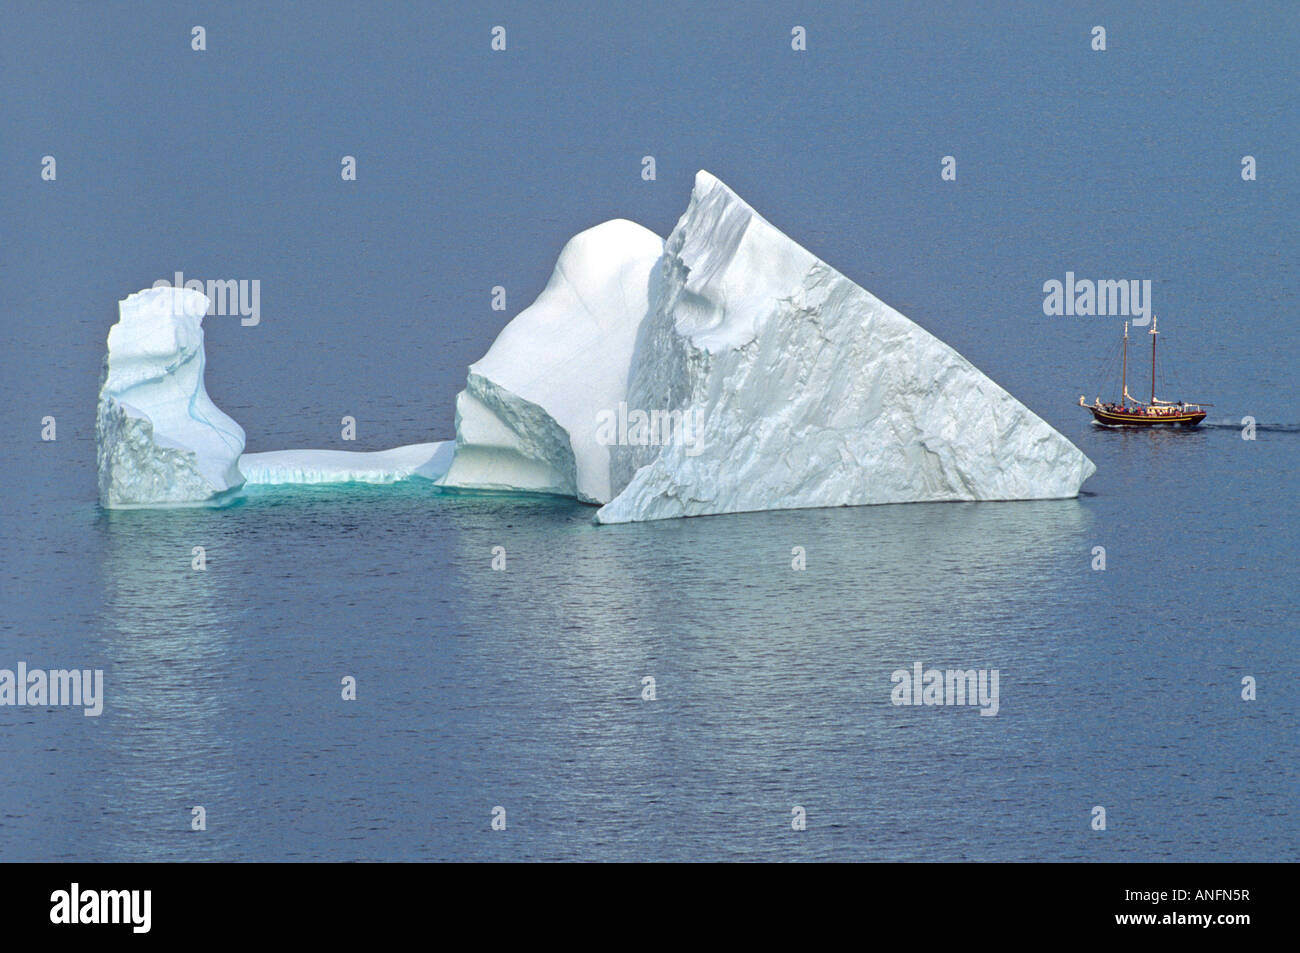 Iceberg and sailing ship off St. John's Newfoundland, Canada. Stock Photo